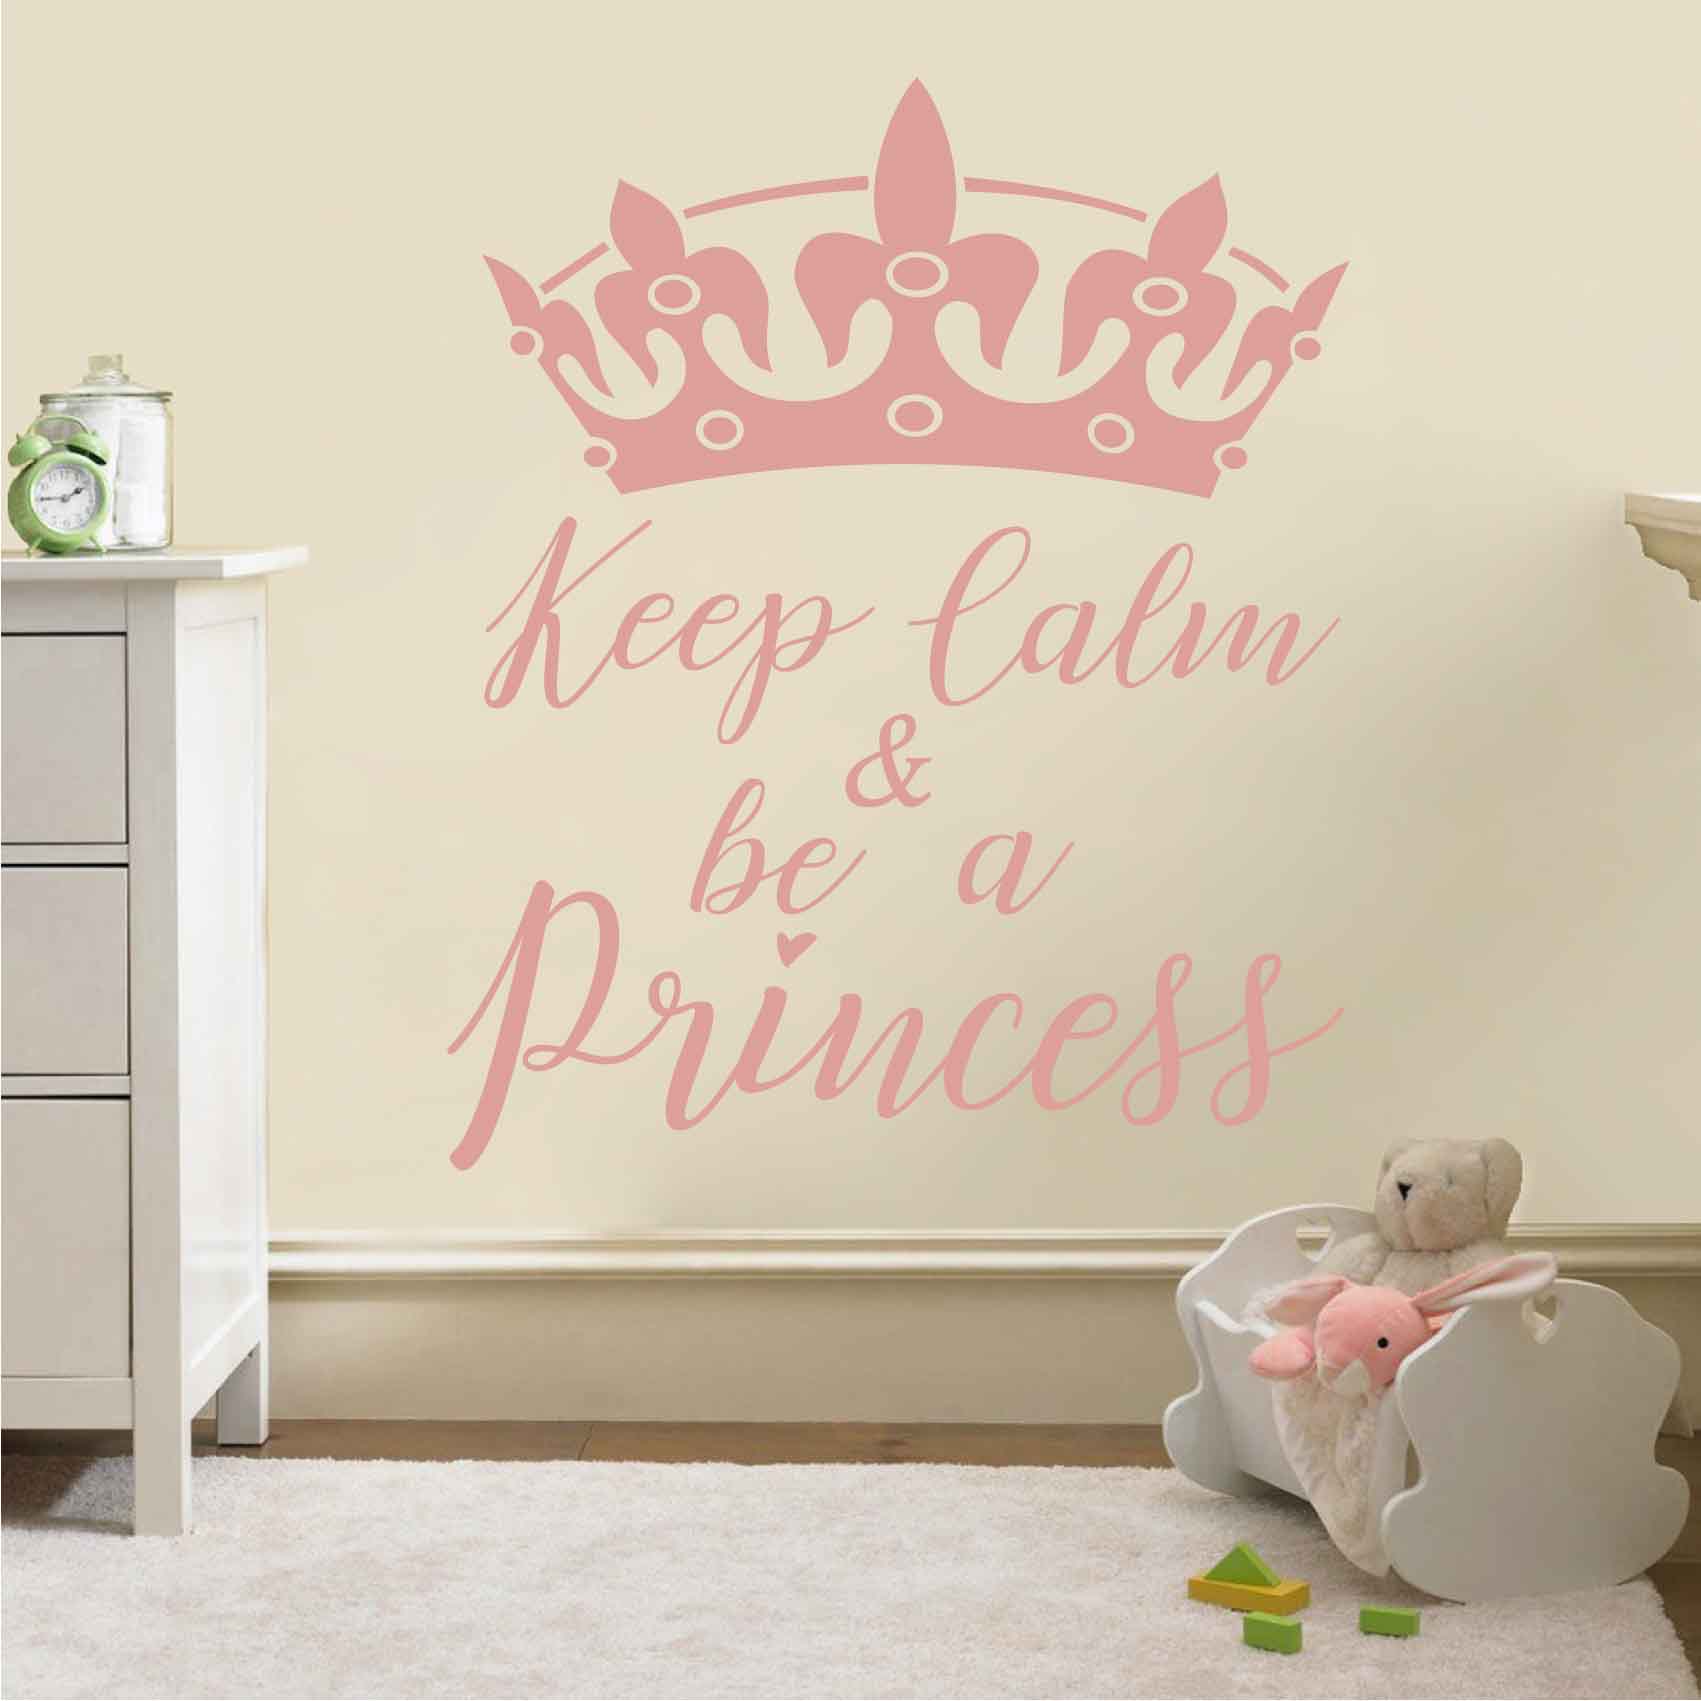 Stickers-keep-calm-and-be-a-princess-ref7princesse-autocollant-princesse-couronne-sticker-muraux-chambre-fille-enfant